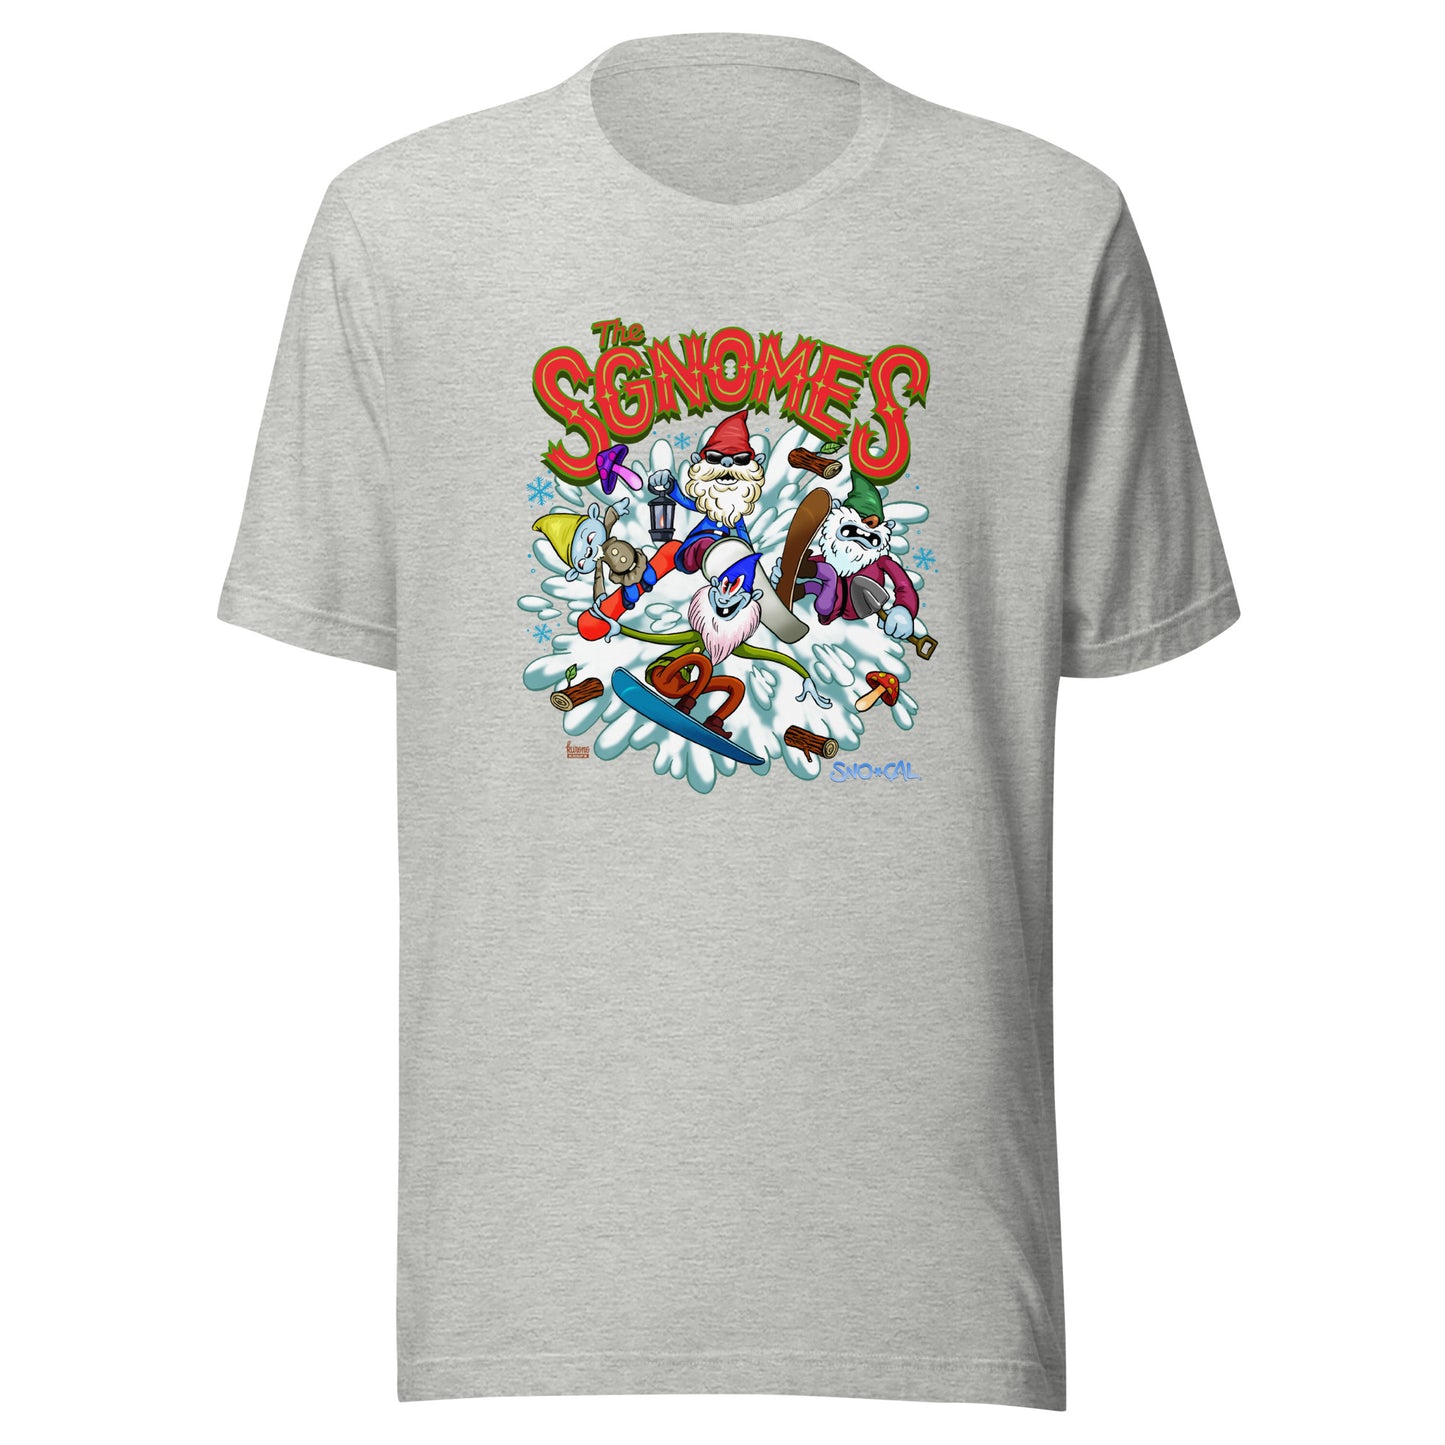 The Sgnomes Shirt